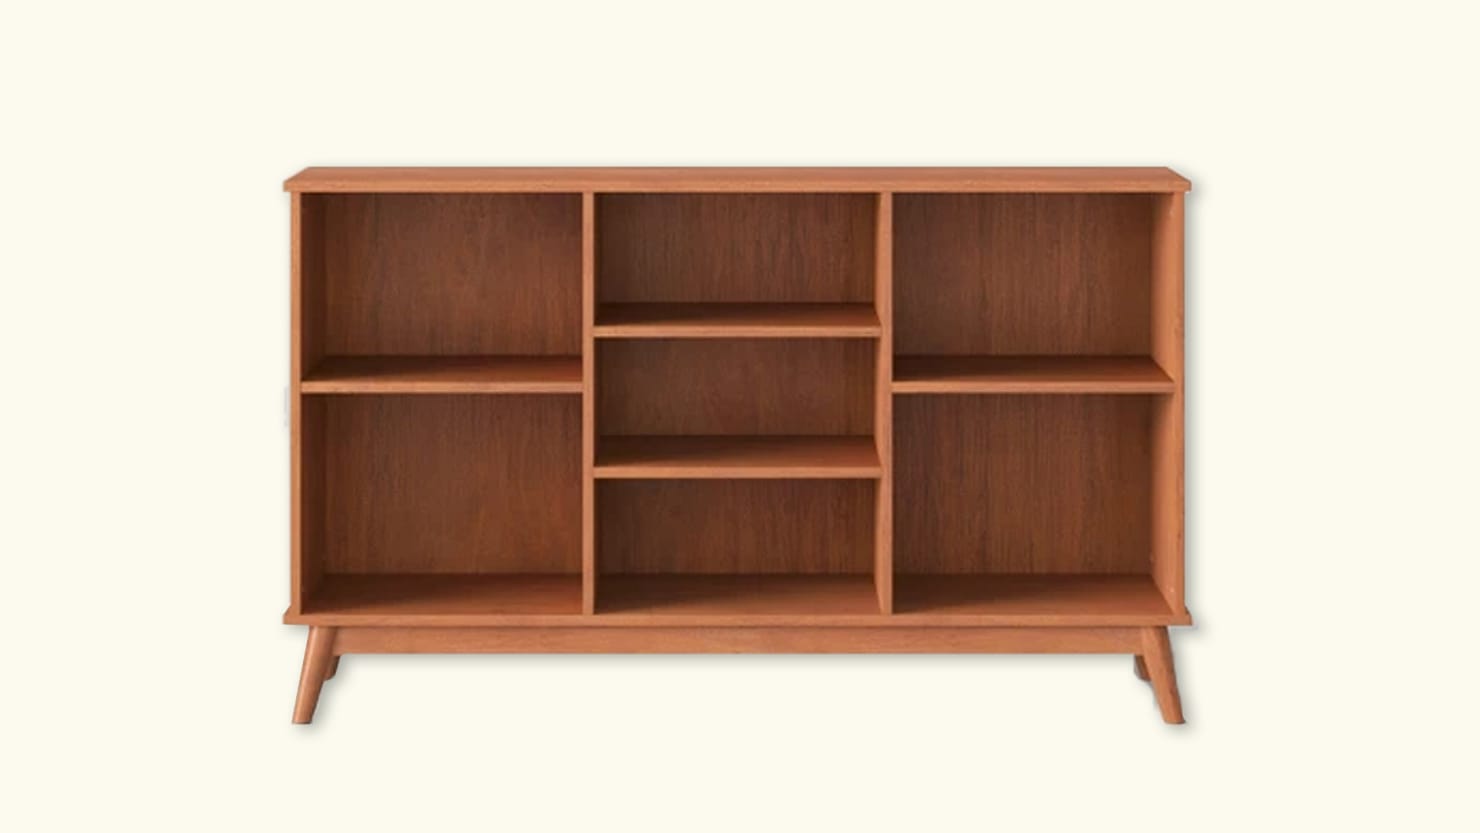 target horizontal bookshelf made by design